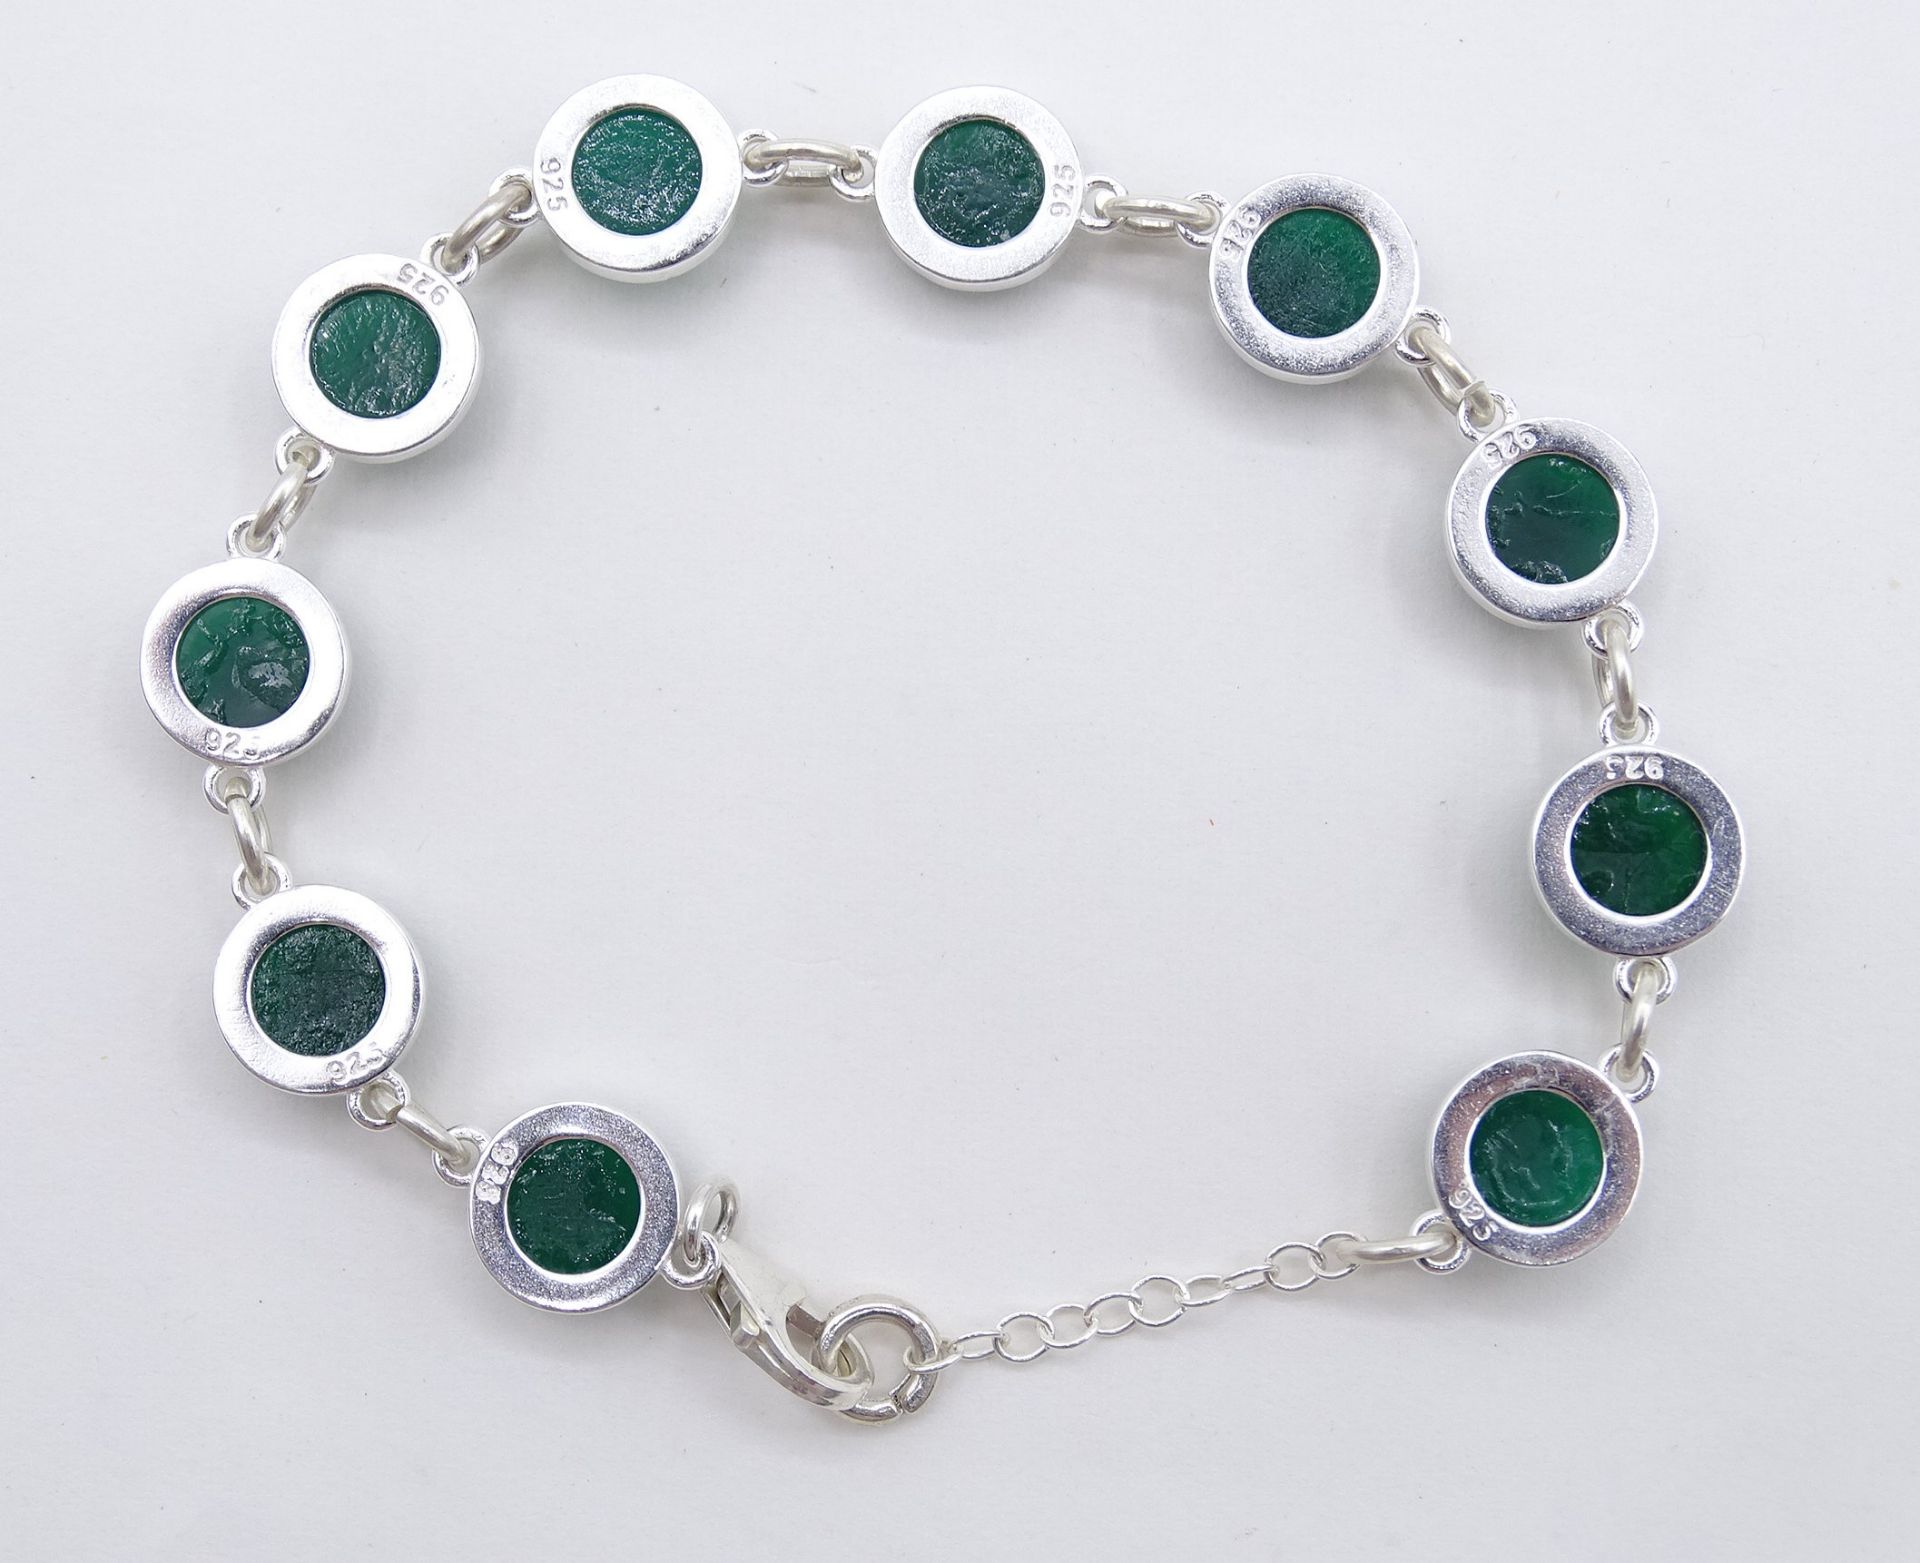 Silberarmband, 925/000, besetzt mit 10 grünen Cabochons, L. 16,5 - 19 cm, 12,2 gr. - Image 3 of 5